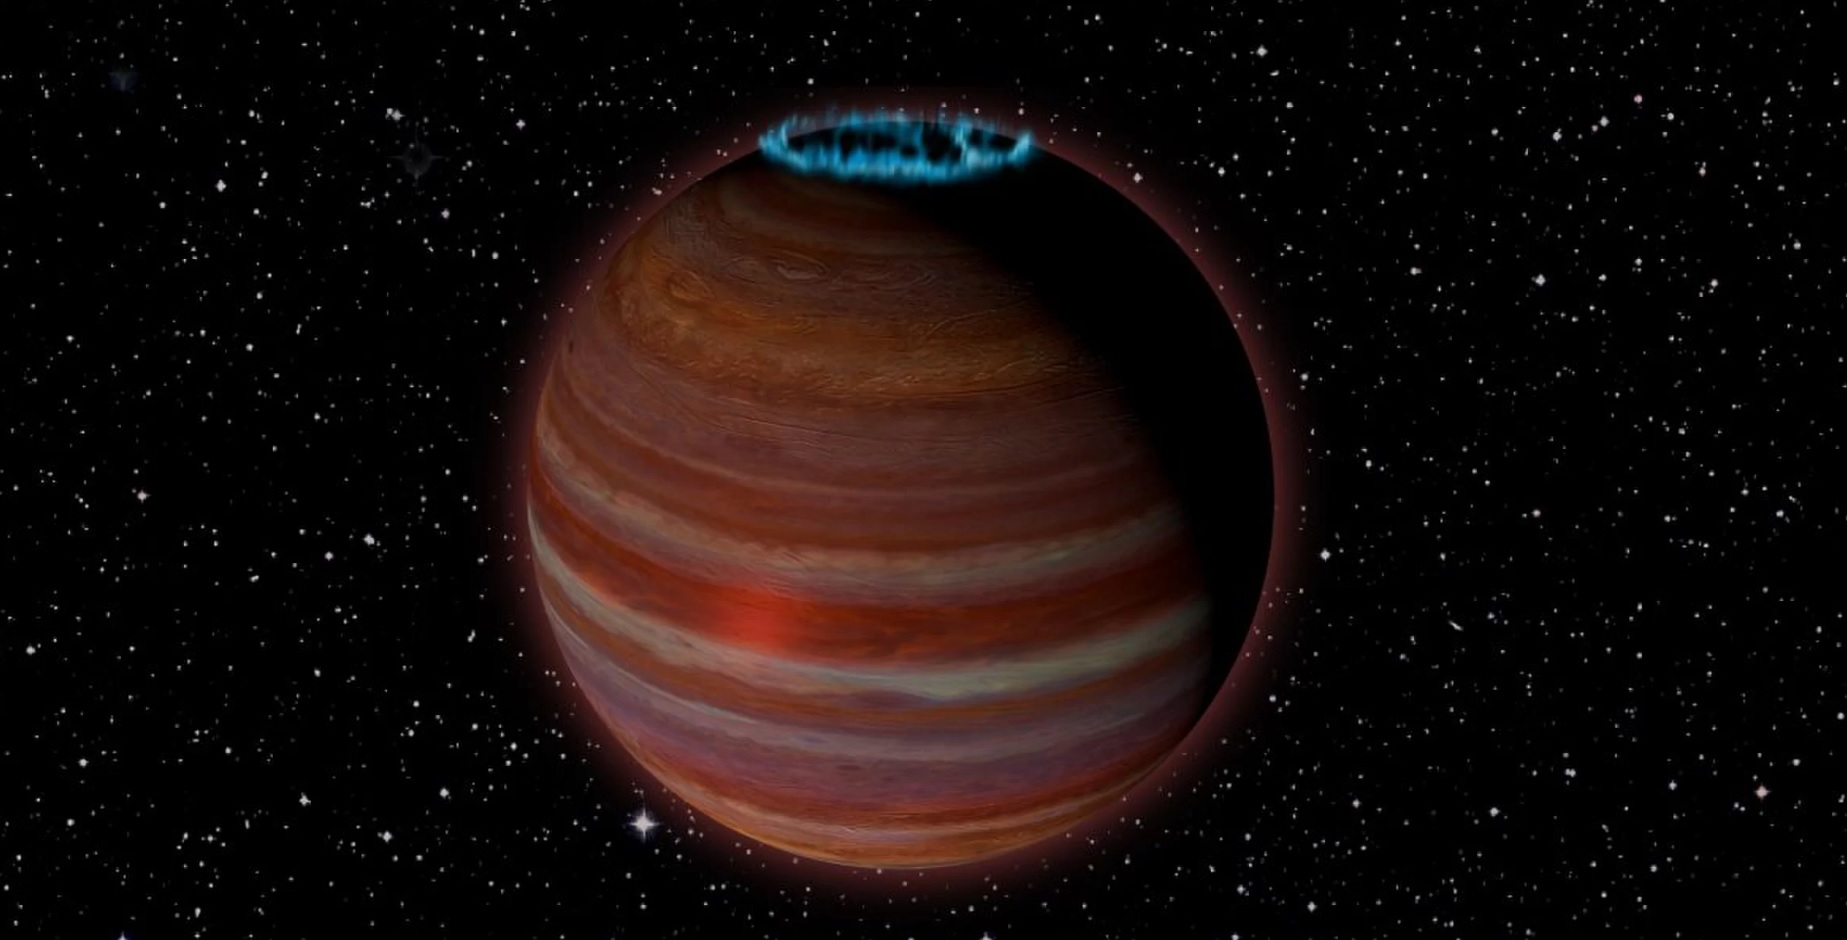 Forskere har oppdaget en gigantisk vandrende planet med en kraftig magnetisk felt